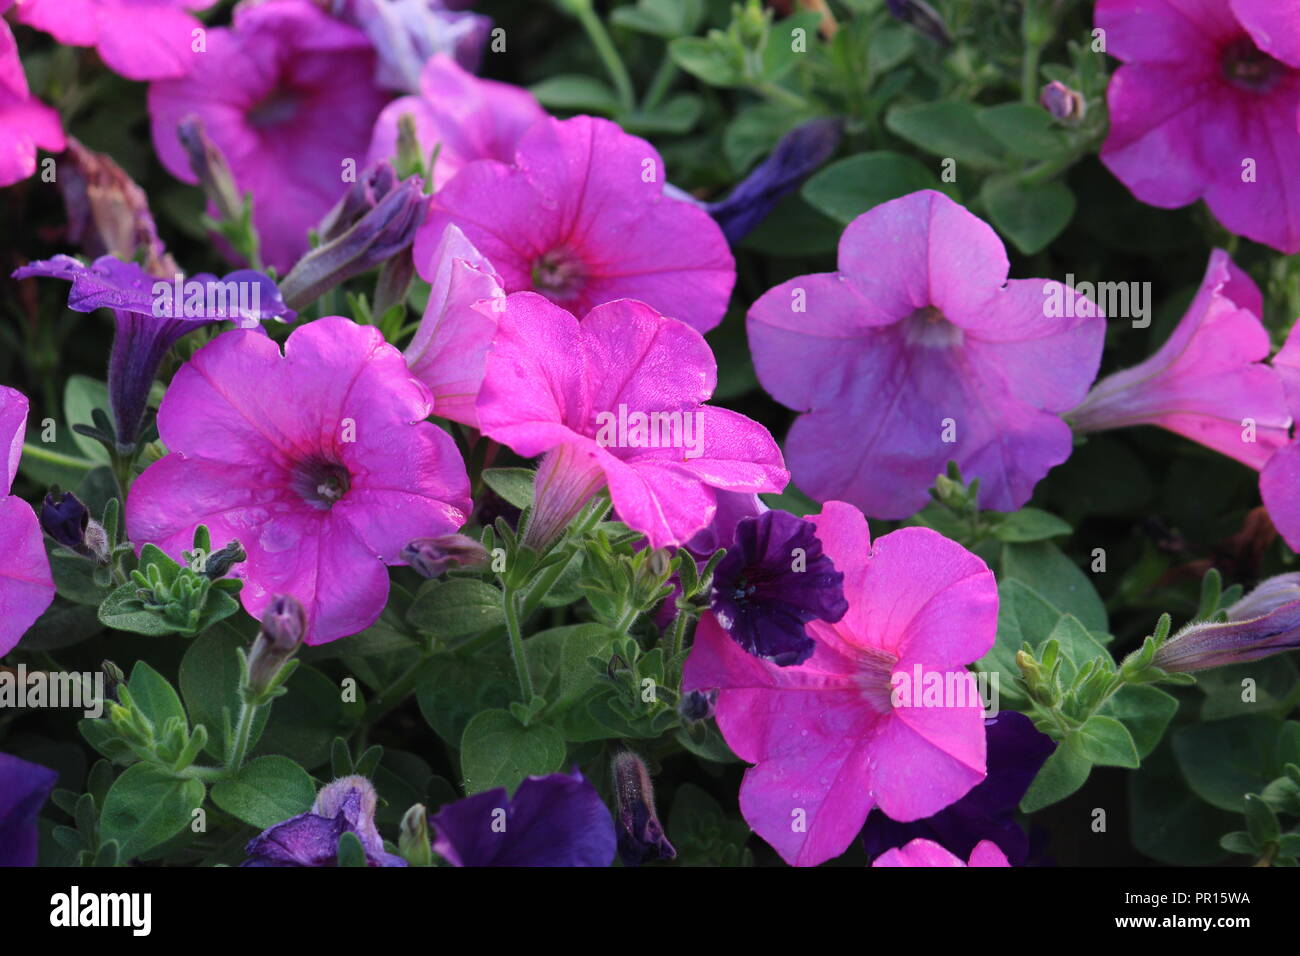 Pink million bells flowers Stock Photo - Alamy